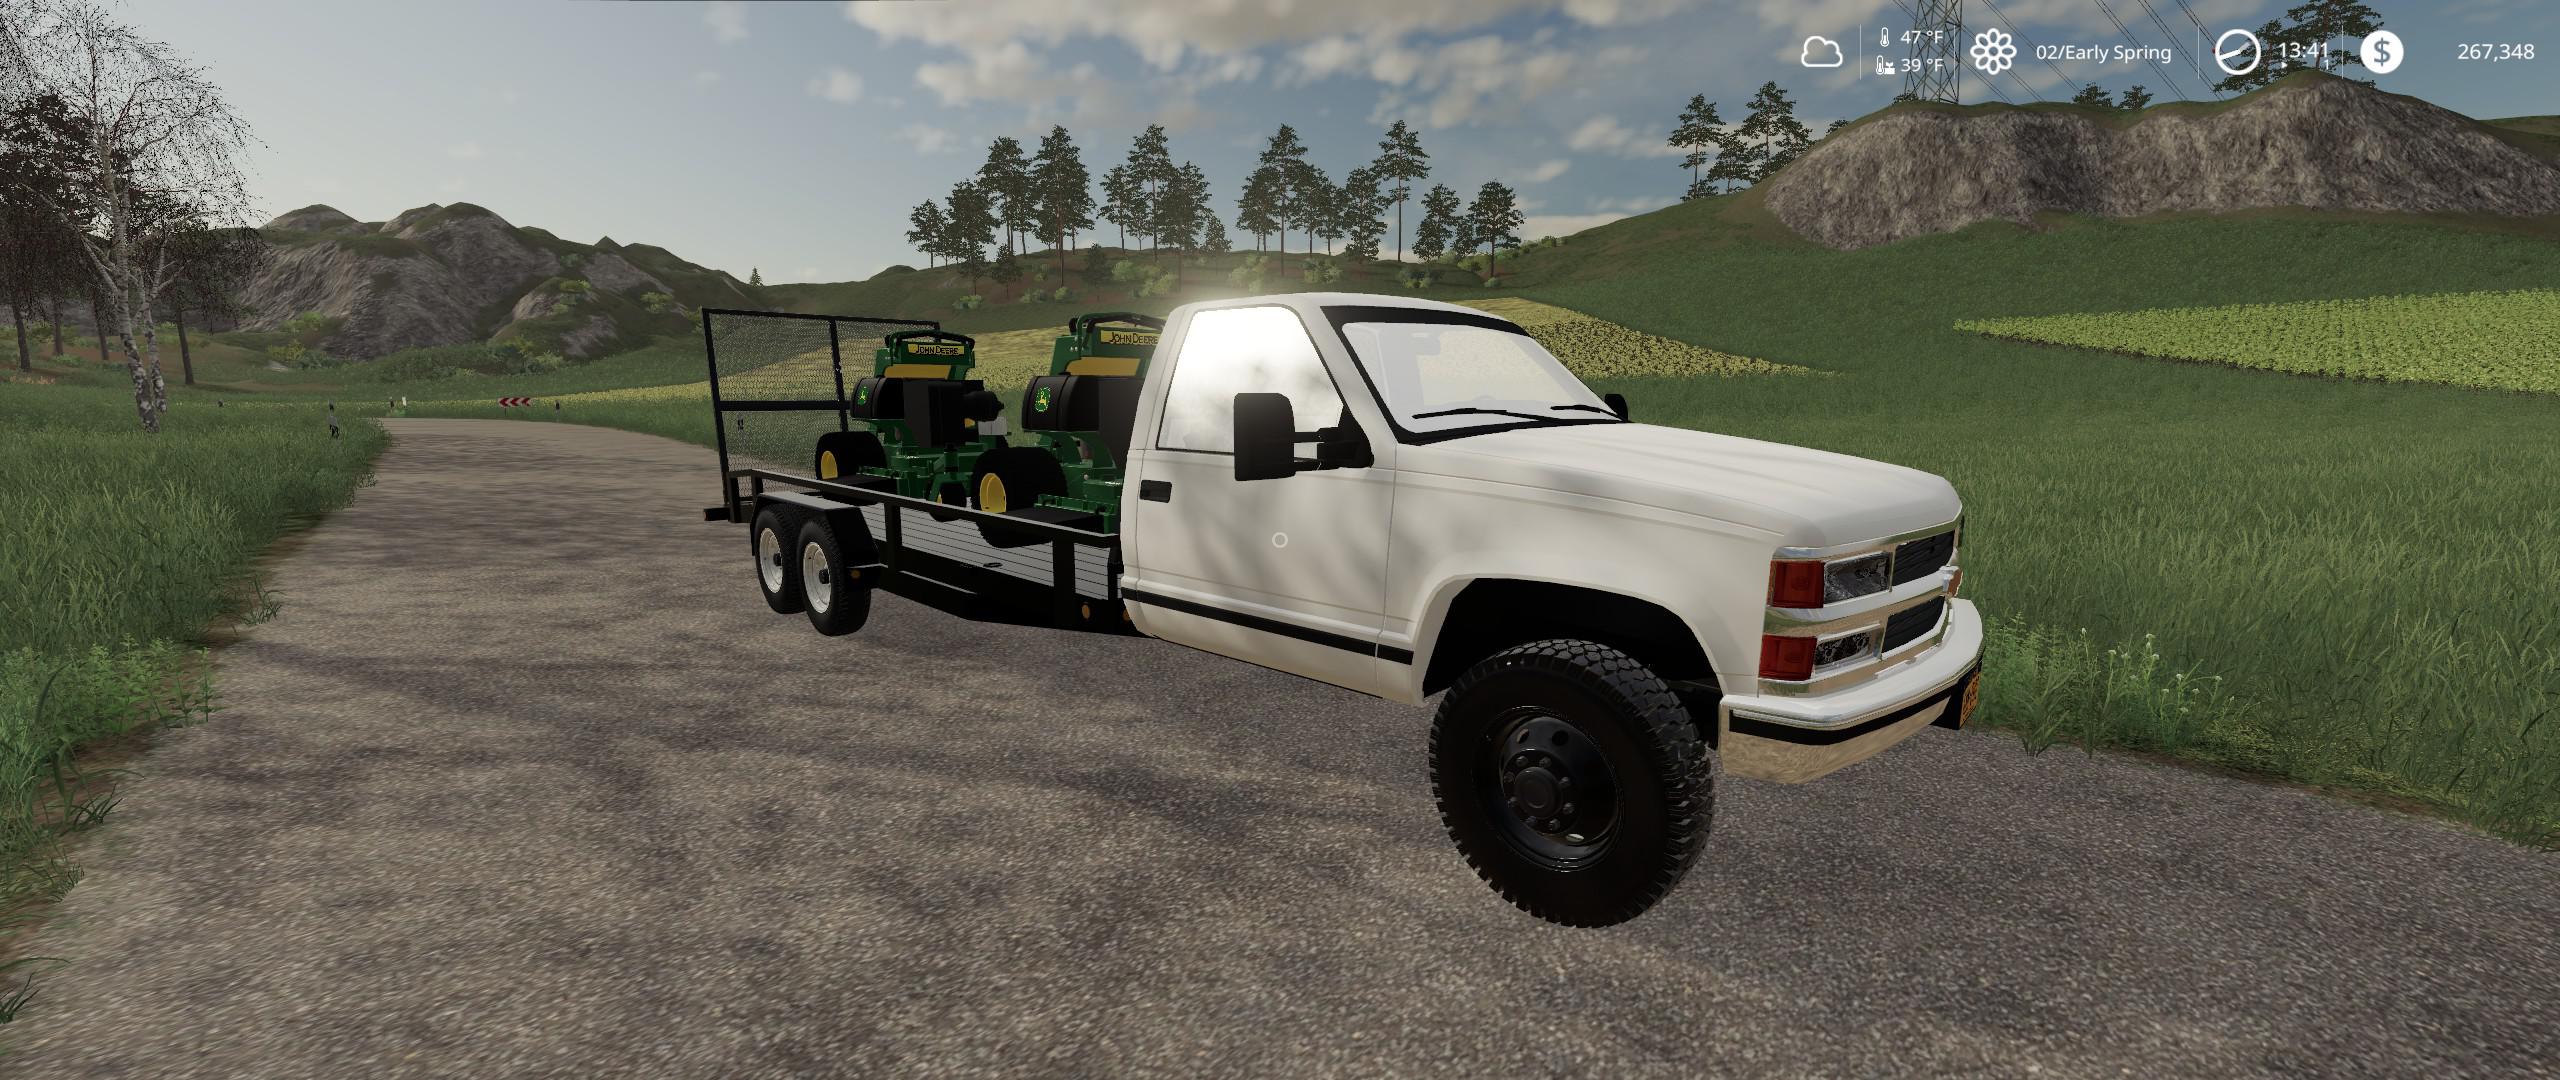 farming simulator 19 pickup truck